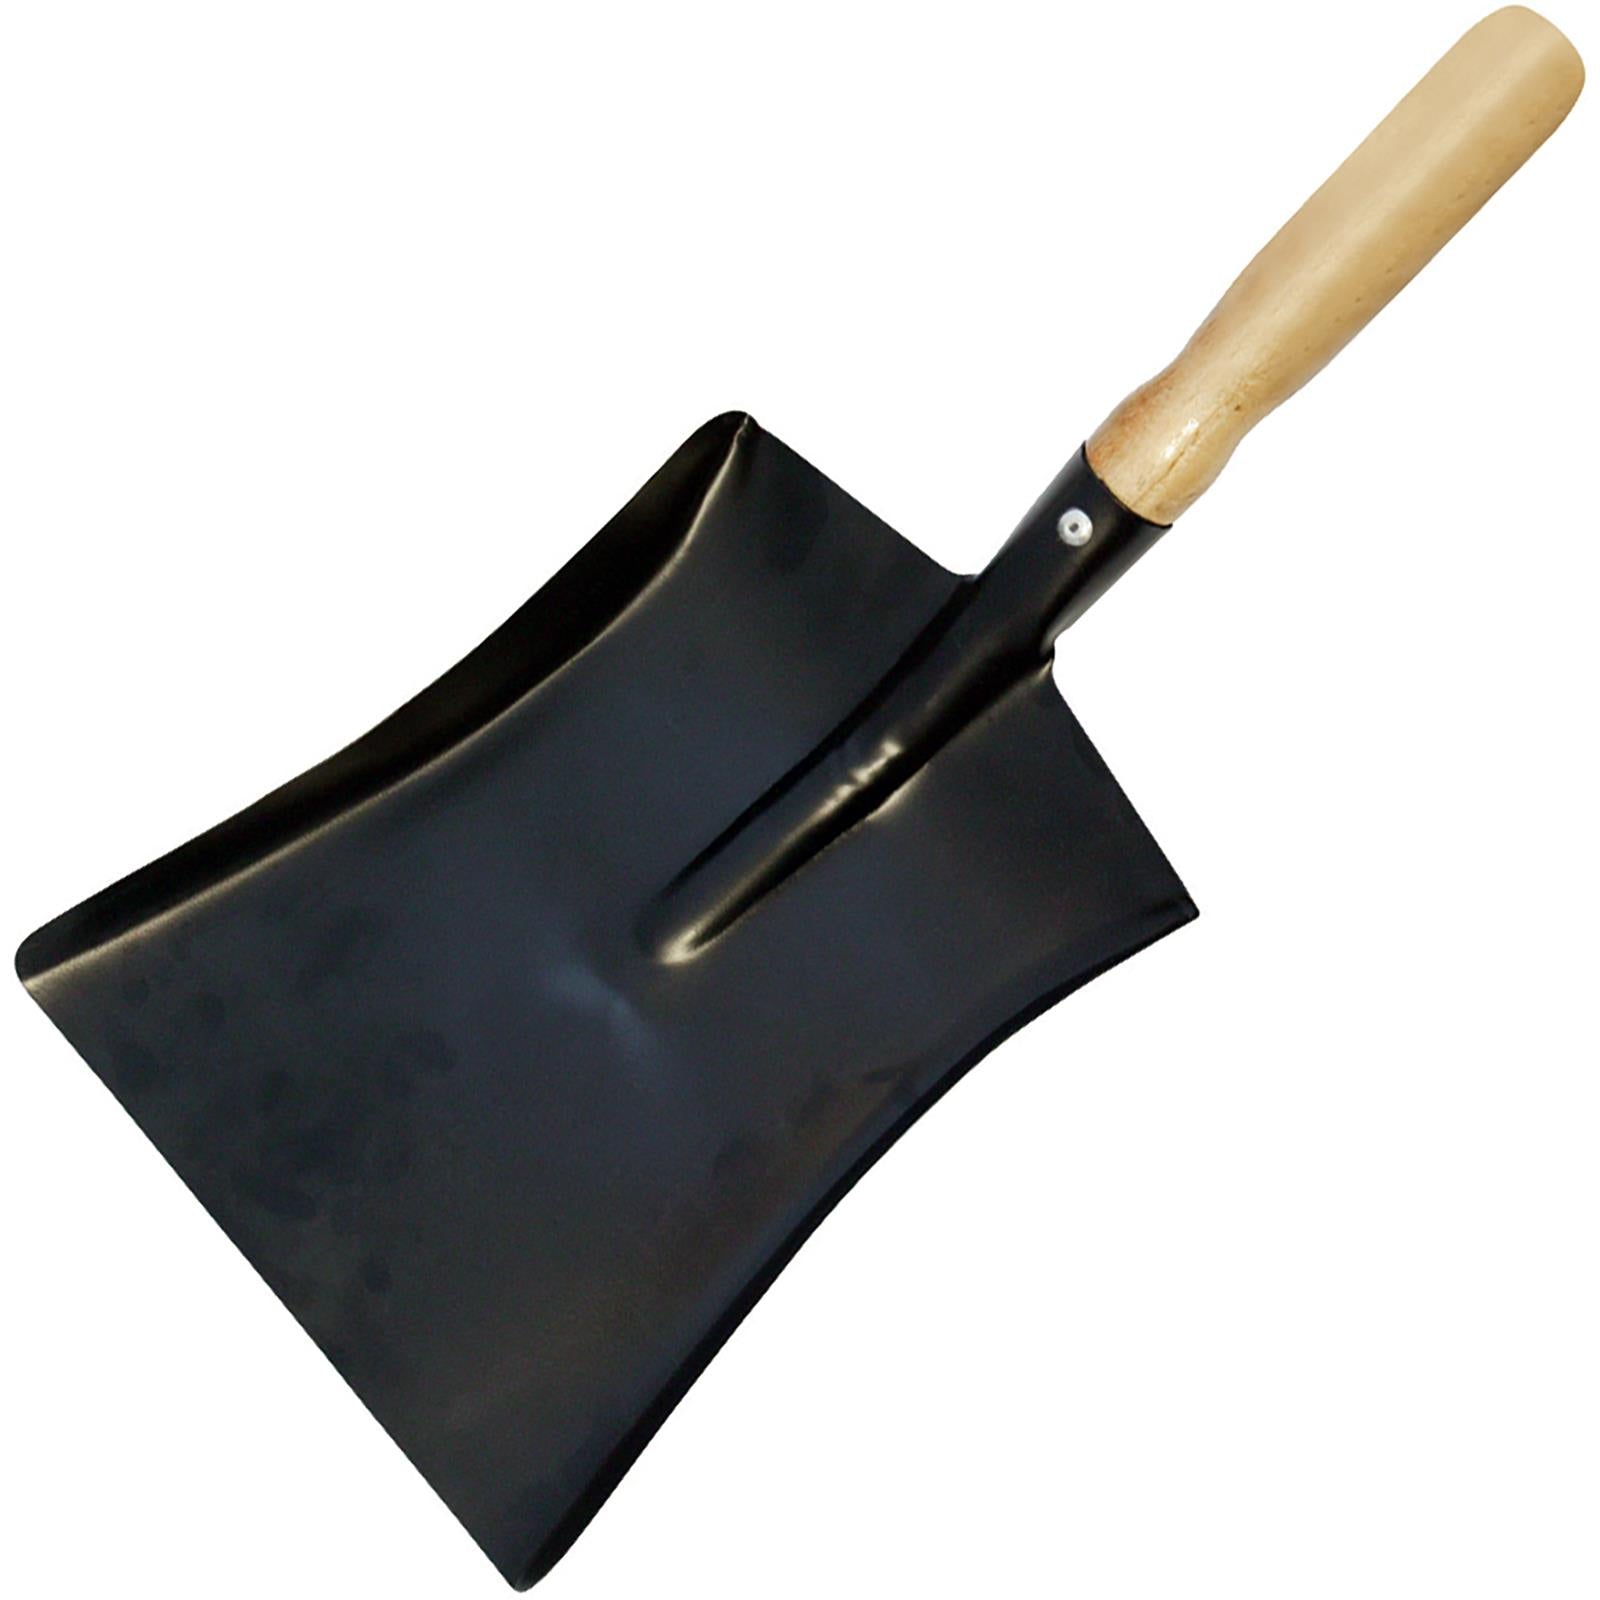 Silverline 230mm Dust Pan Hardwood Handle Cleaning Dirt Scoop Shovel Steel